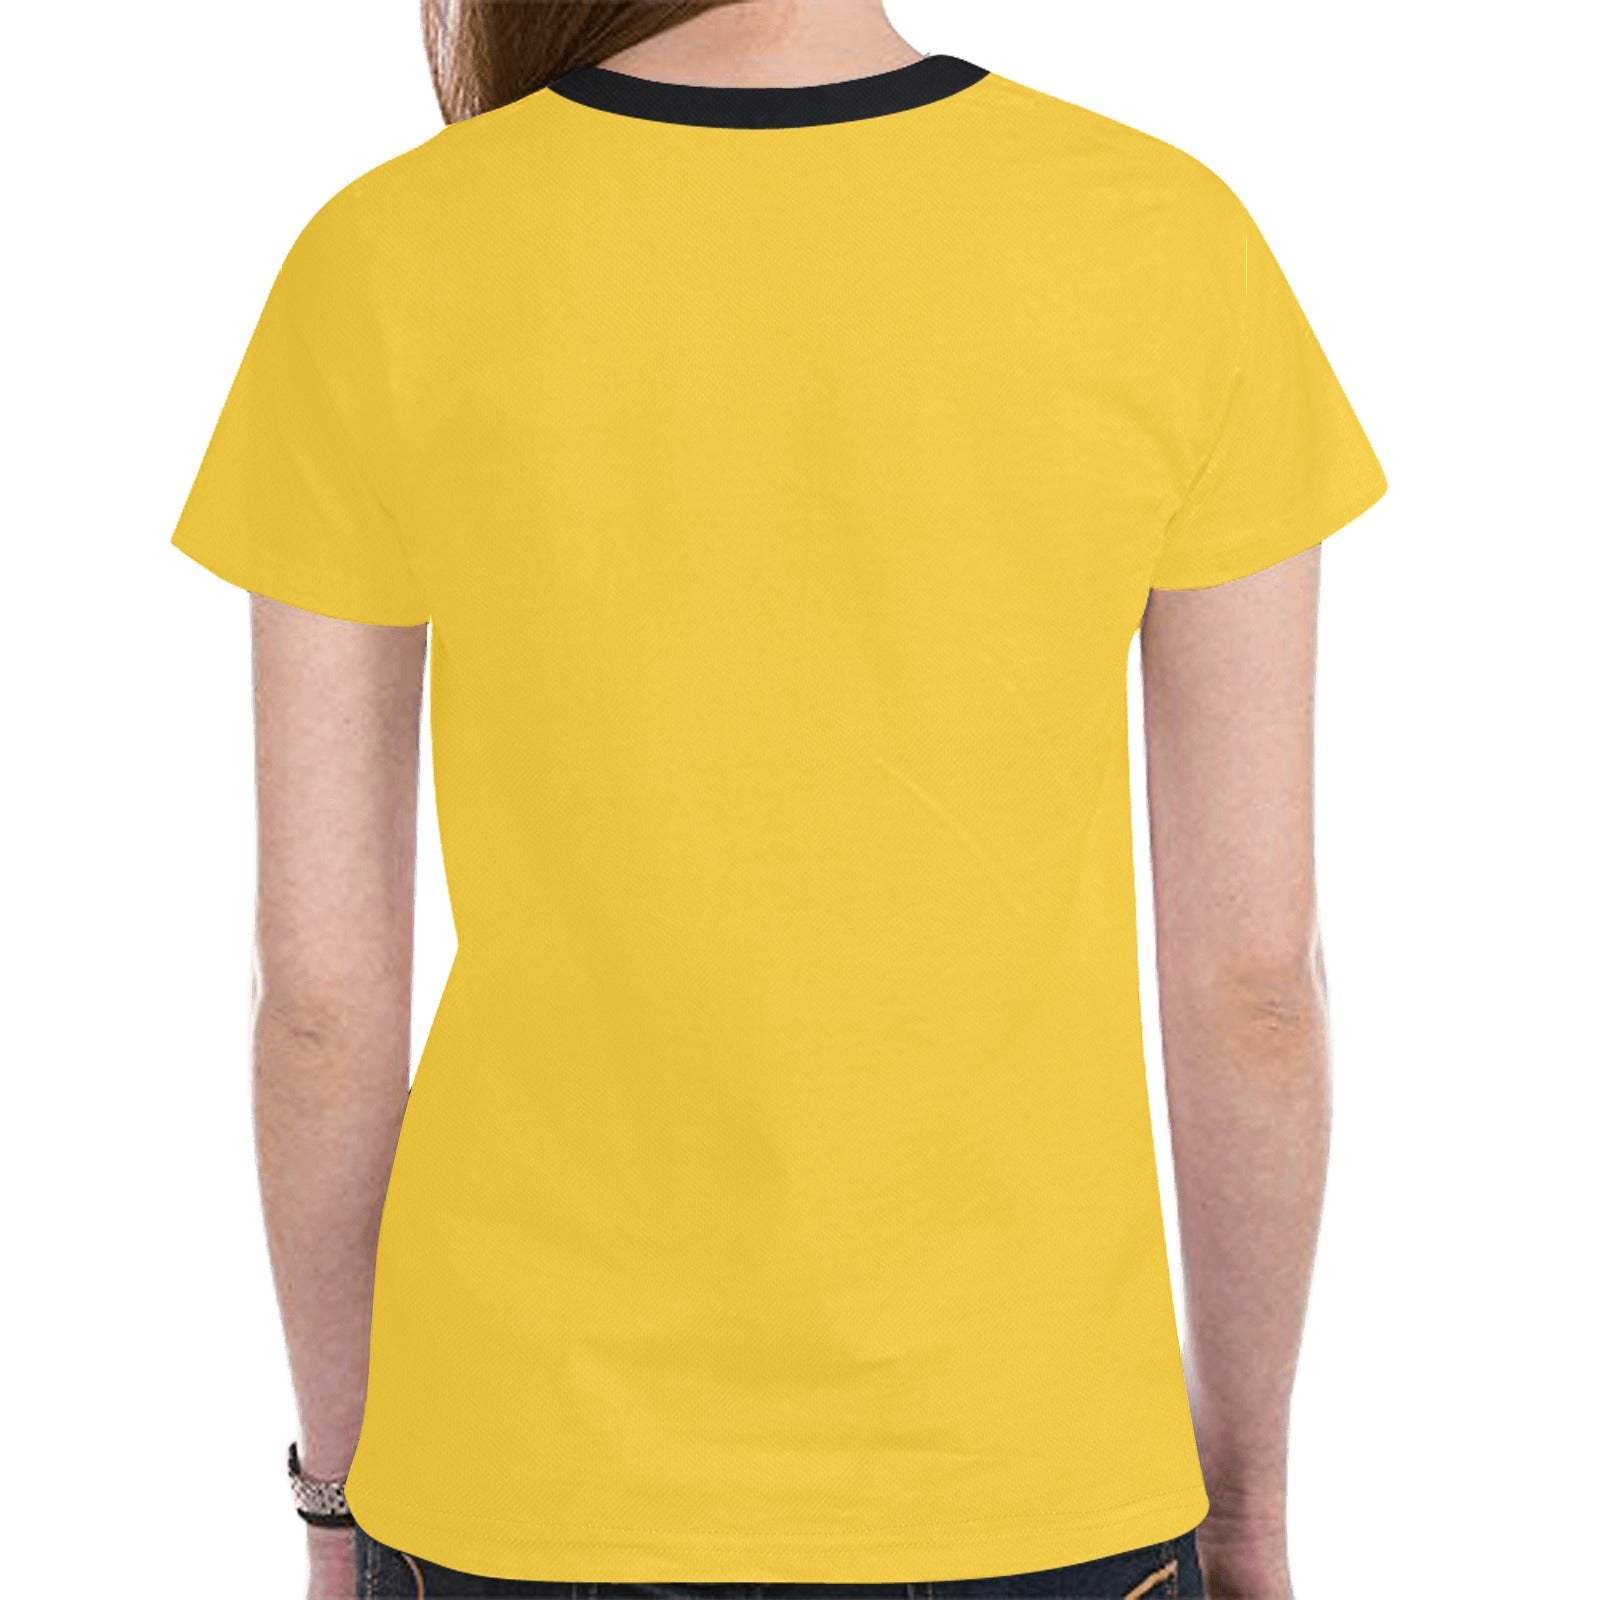 Wolf Spirit Guide (Yellow) T-shirt for Women